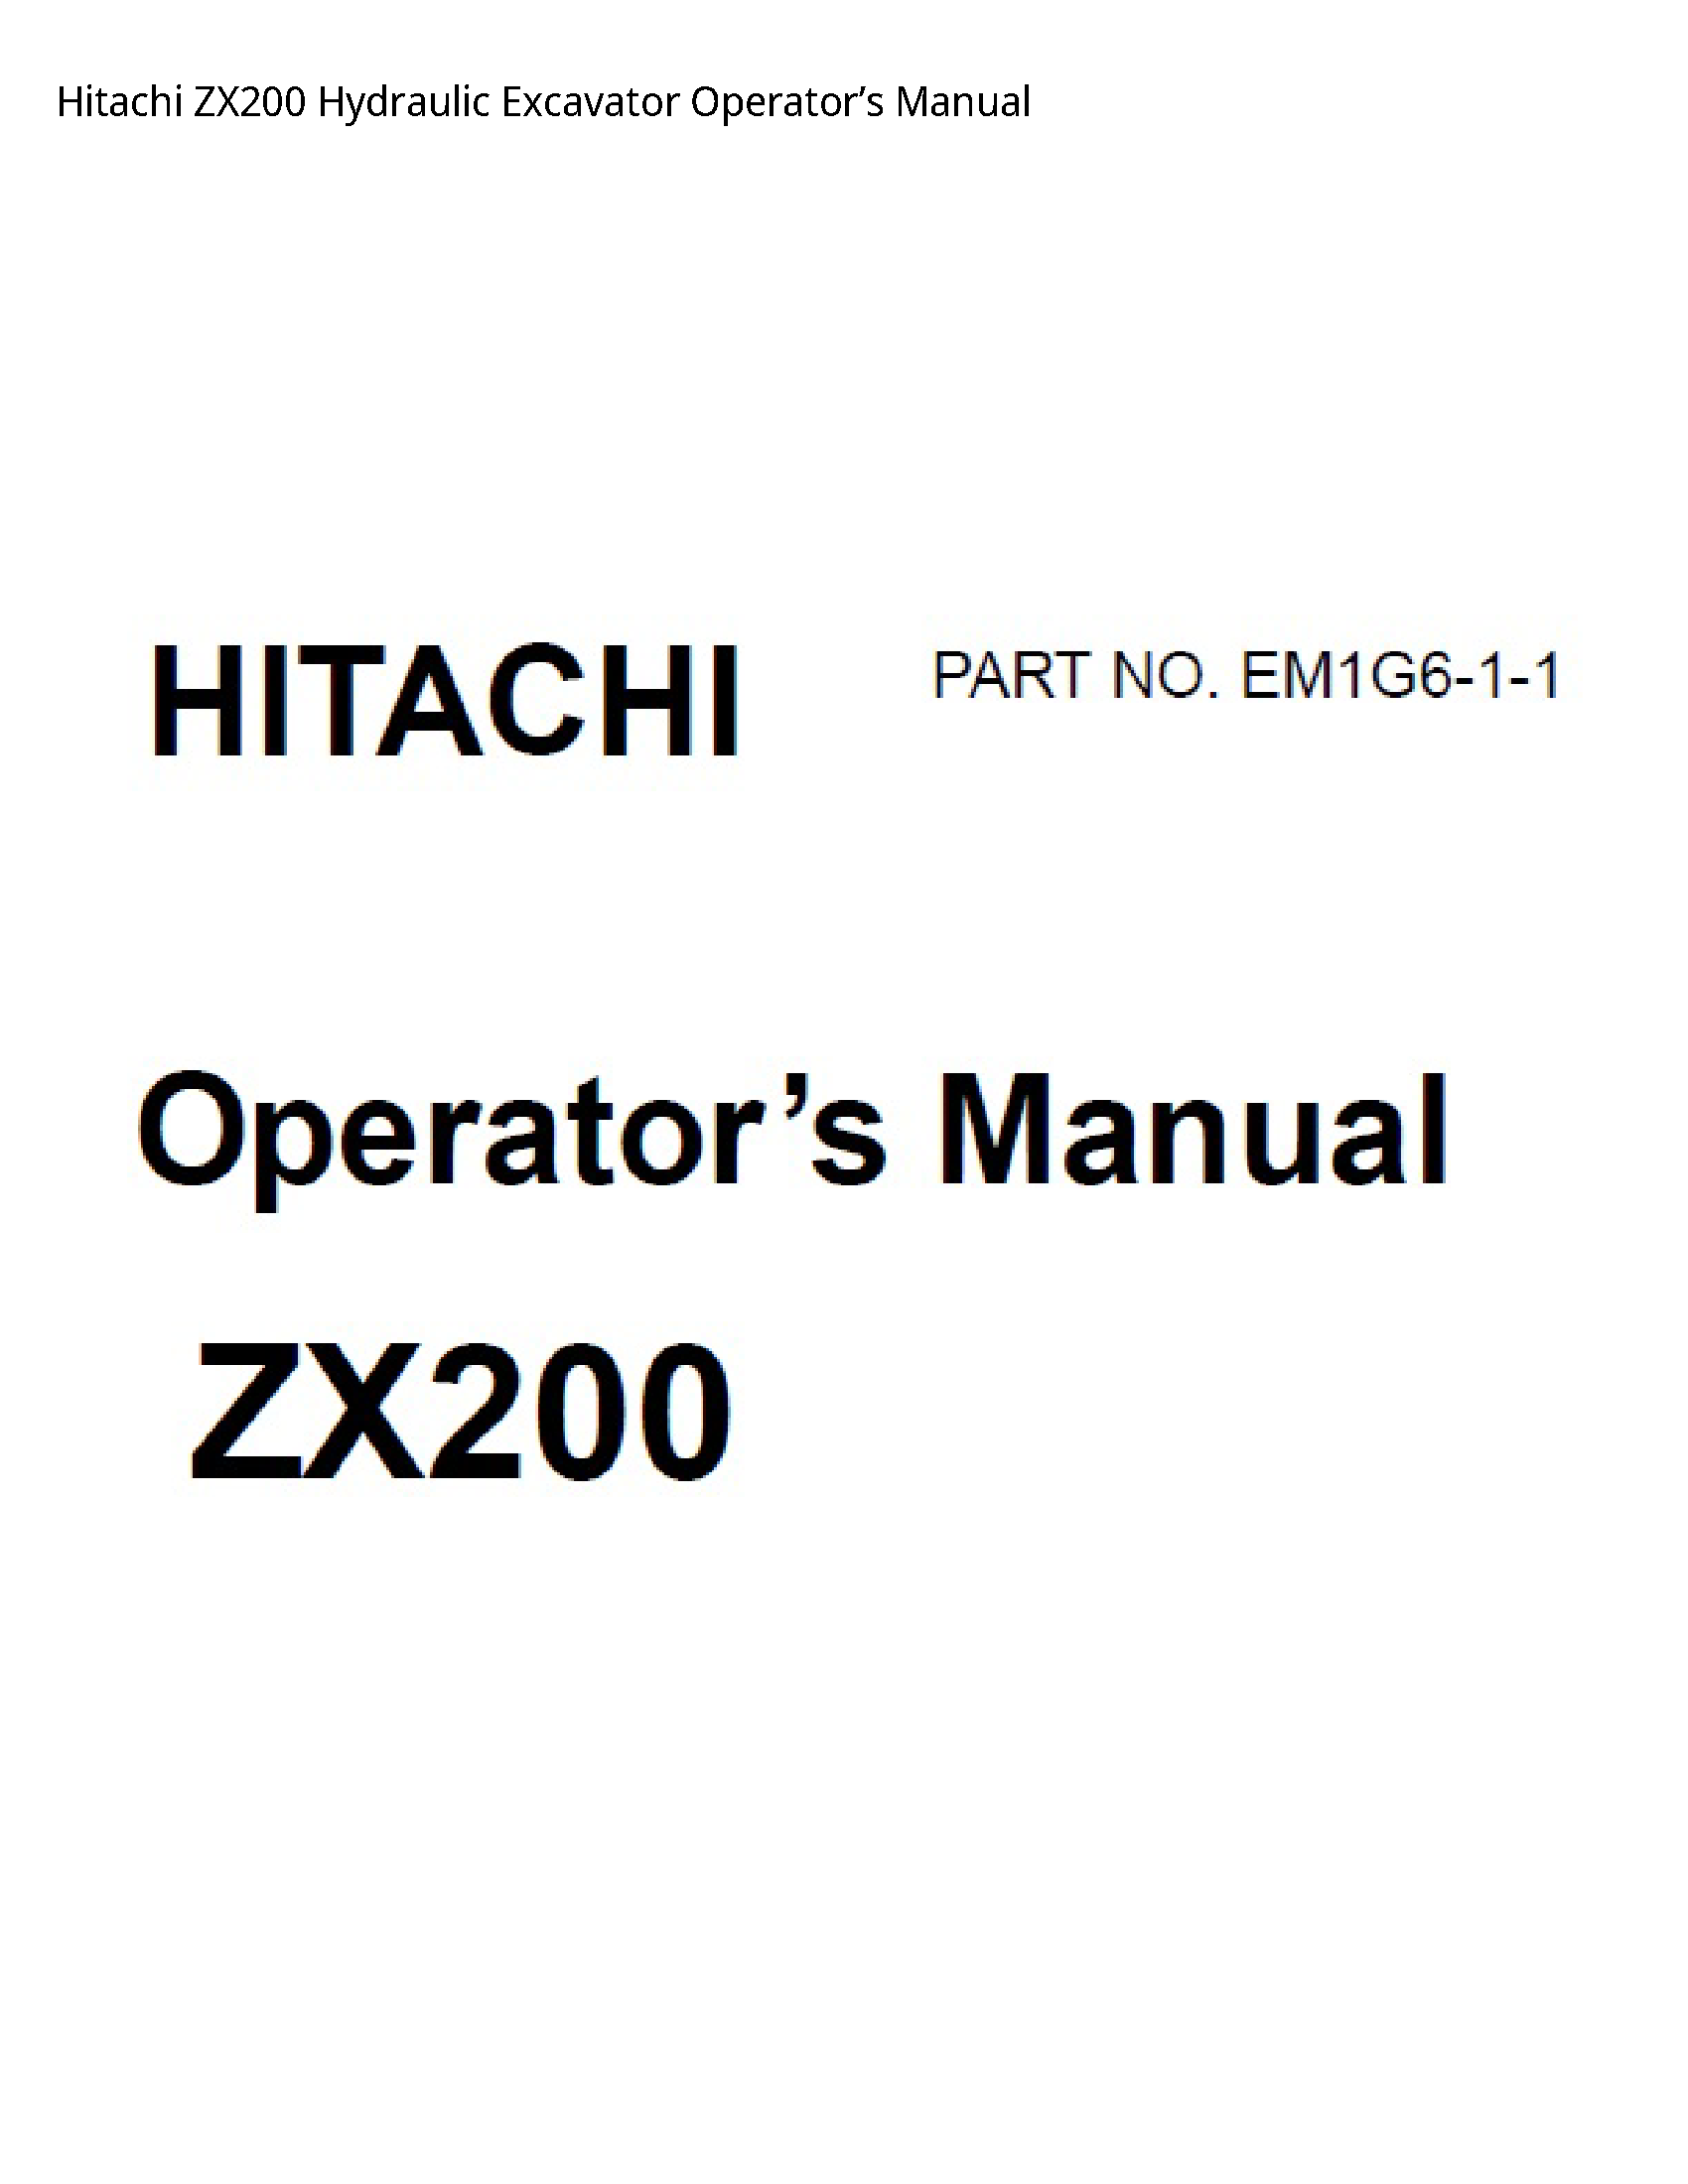 Hitachi ZX200 Hydraulic Excavator Operator’s manual